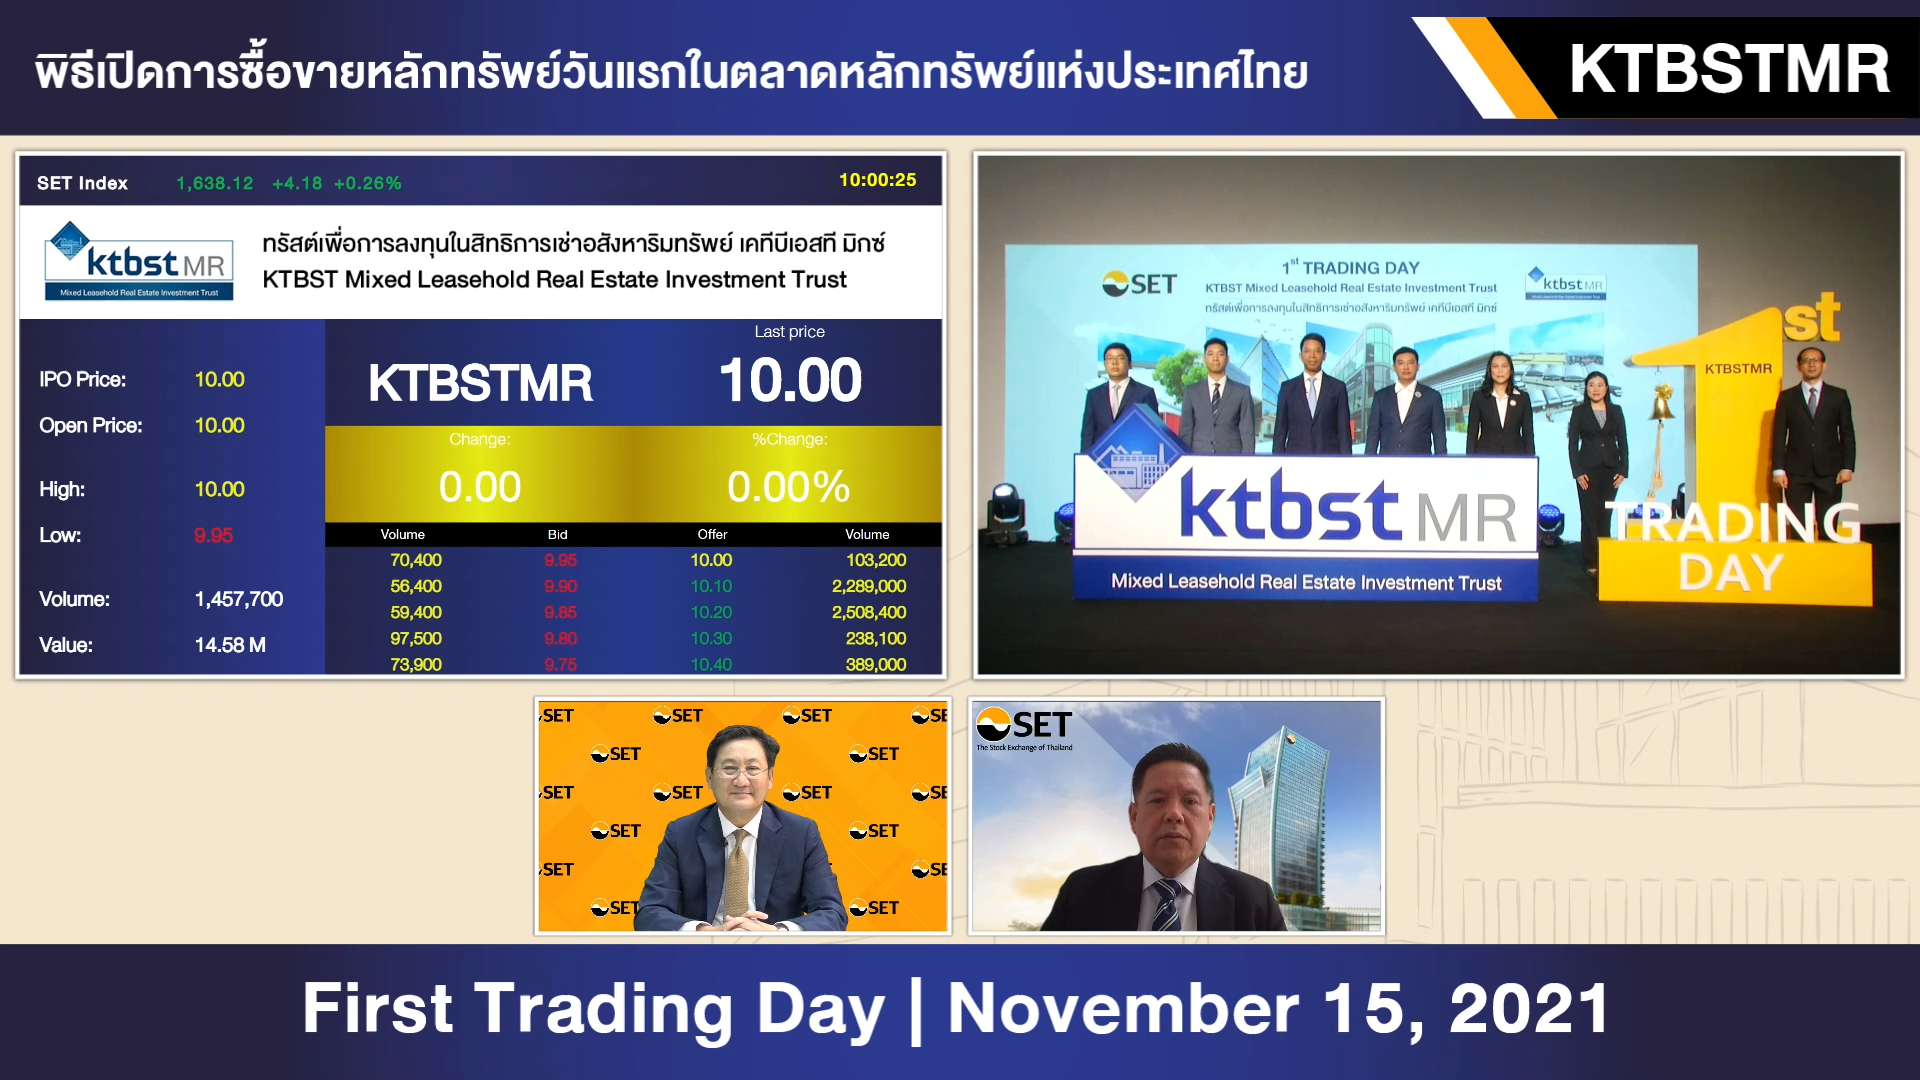 KTBSTMR เริ่มซื้อขายในตลาดหลักทรัพย์ฯ วันแรก